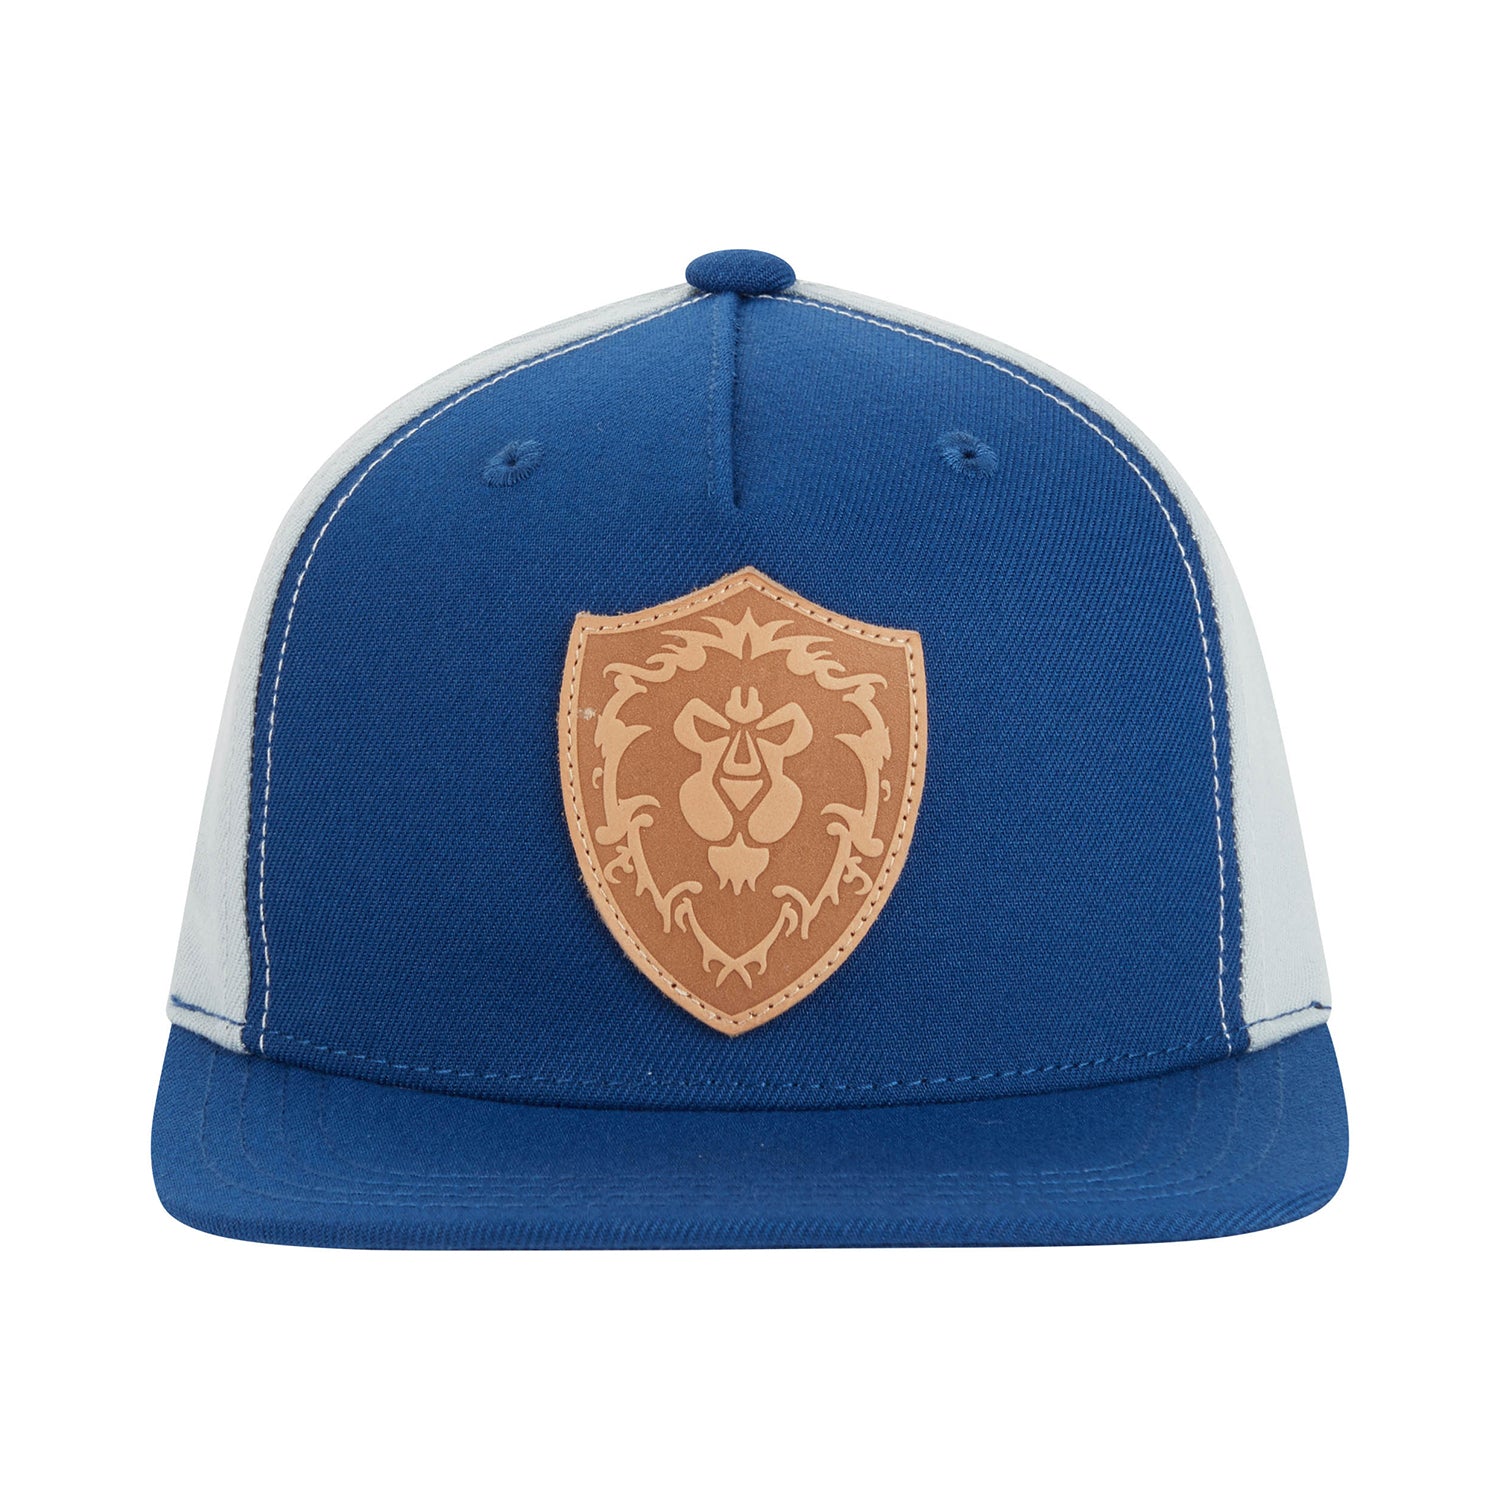 World of Warcraft Alliance J!NX Blue Leather Emblem Patch Flatbill Snapback Hat - Front View